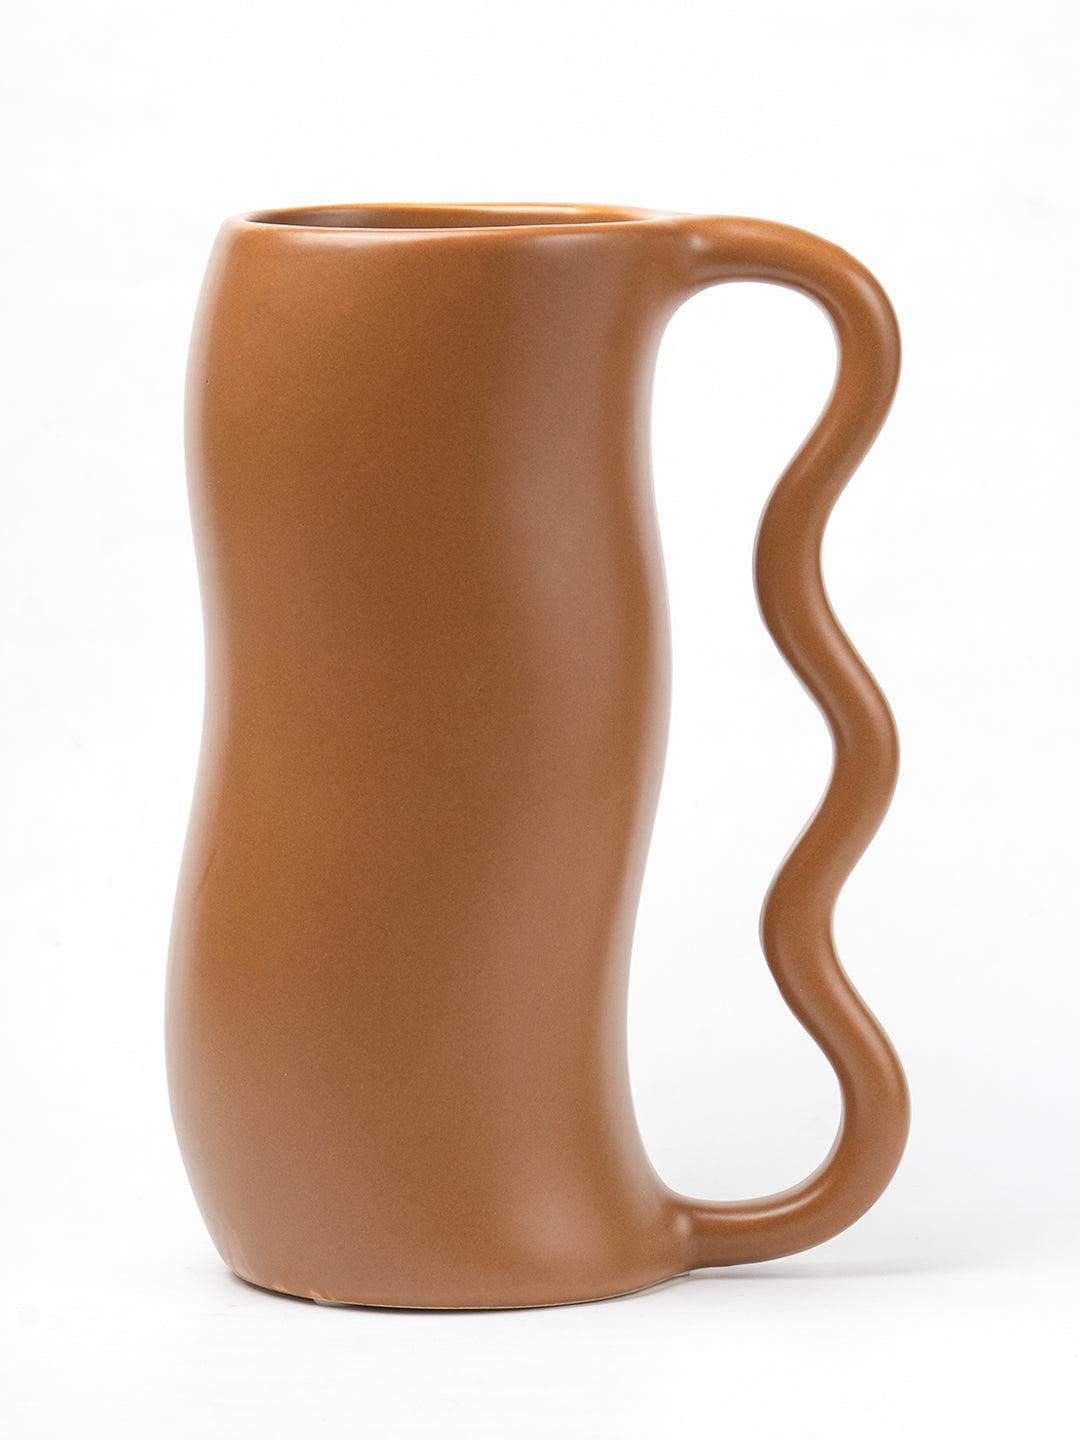 Brown Ceramic Curvy Vase - Curvy, Flower Holder - 2